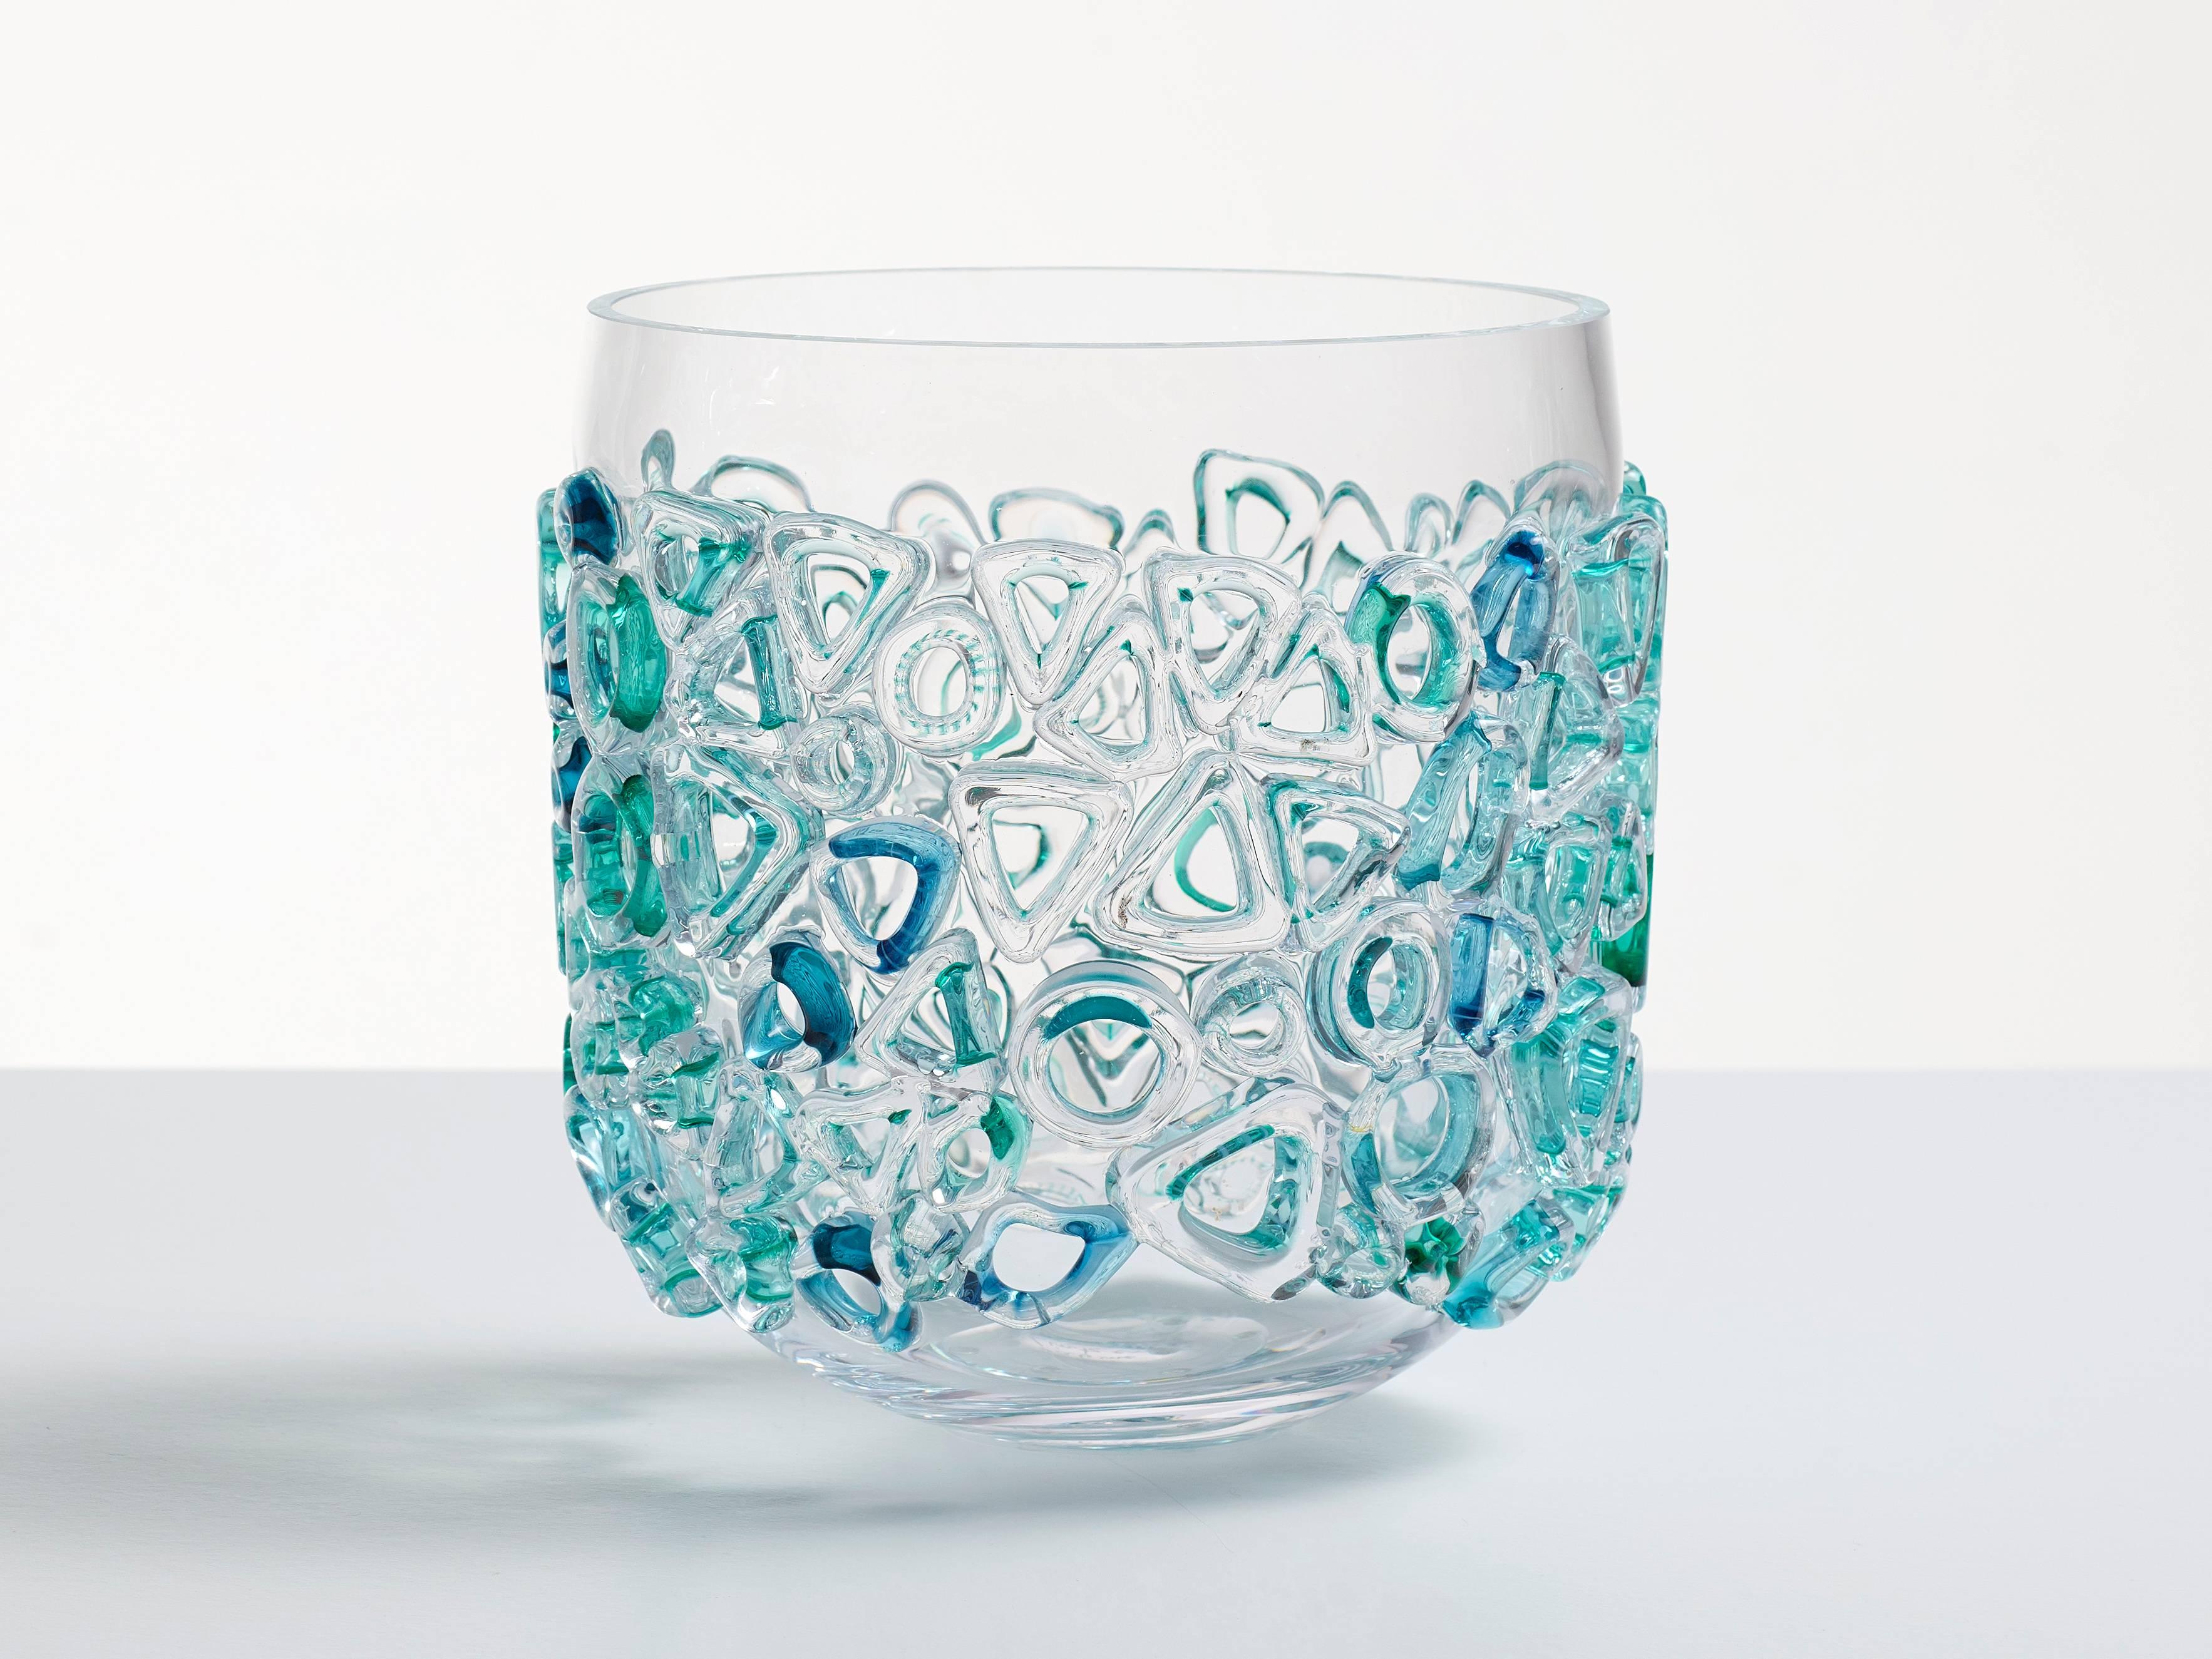 Sabine Lintzen Figurative Sculpture - Clear glass vessel. Murano glass style glass bowl, clear glass with blue & green